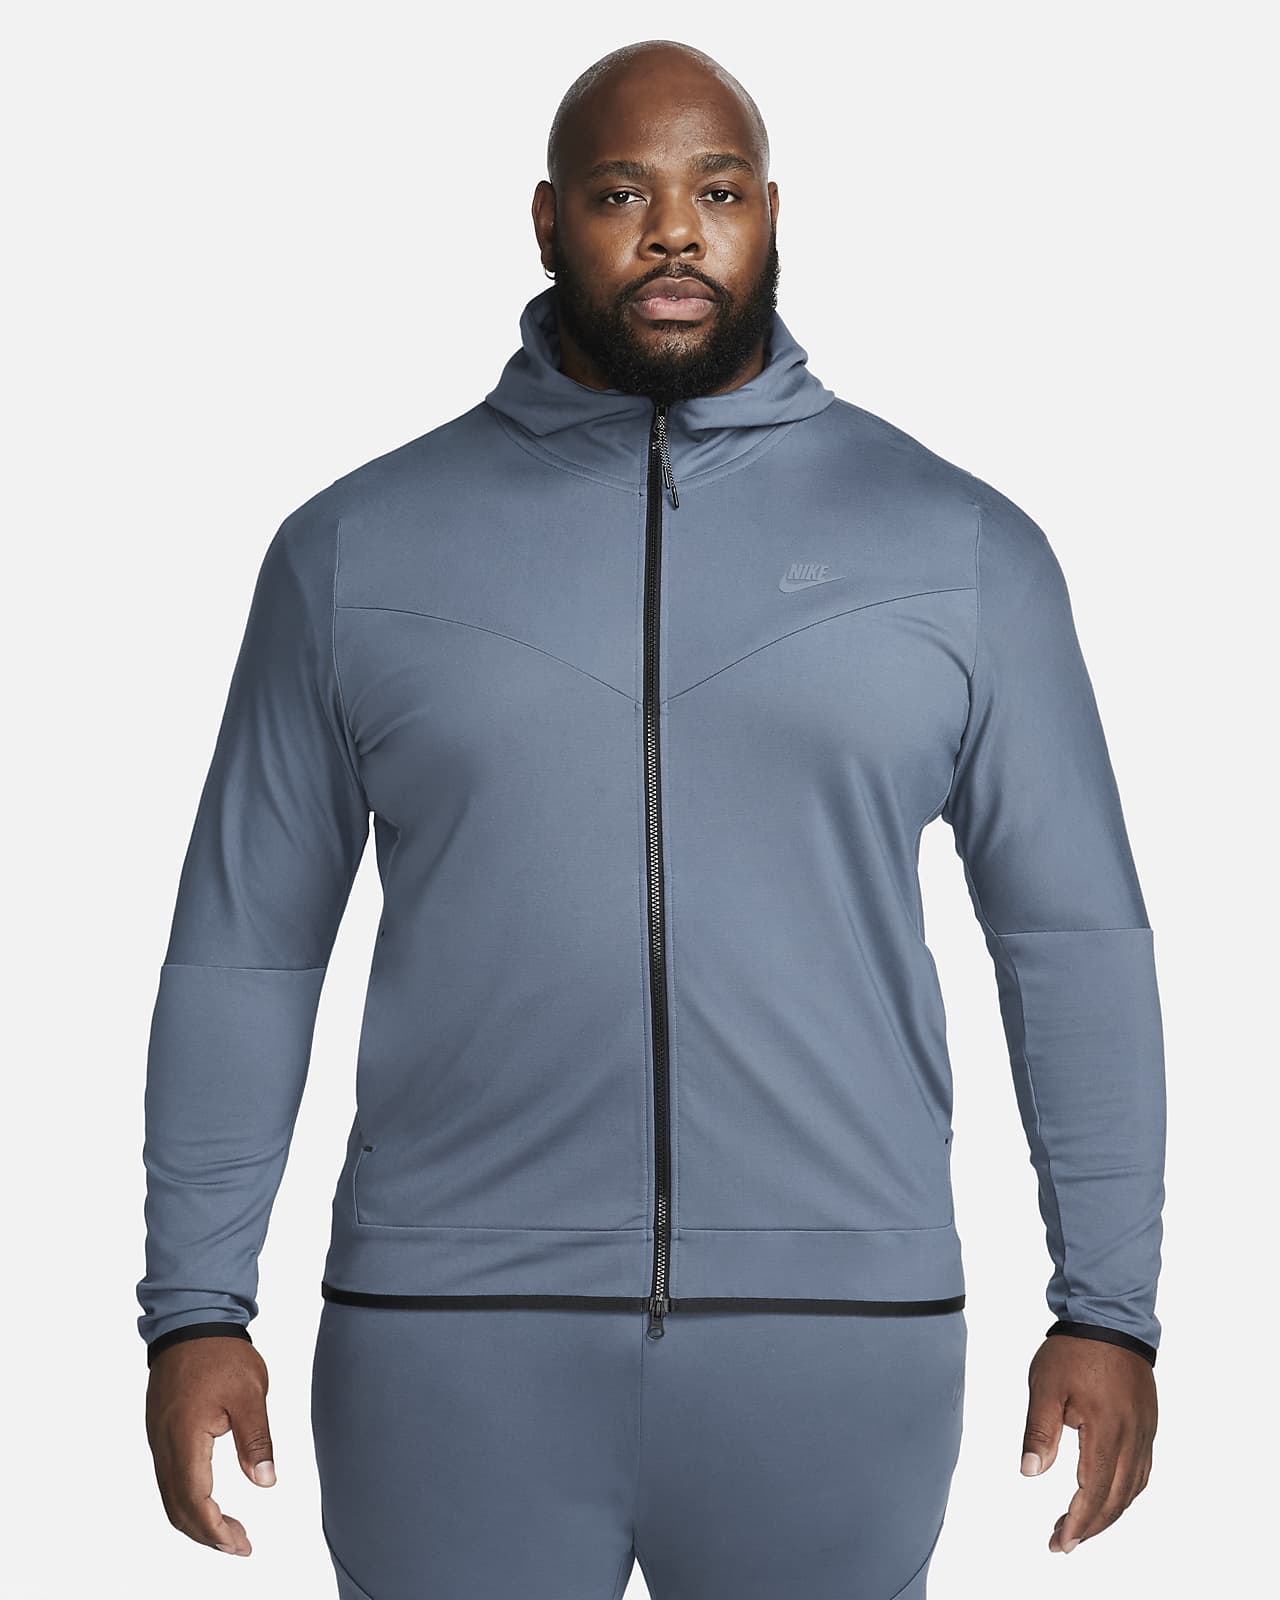 Nike Sportwear Tech Fleece Set (Jacket + Pant) Washed Teal/Black Size XL